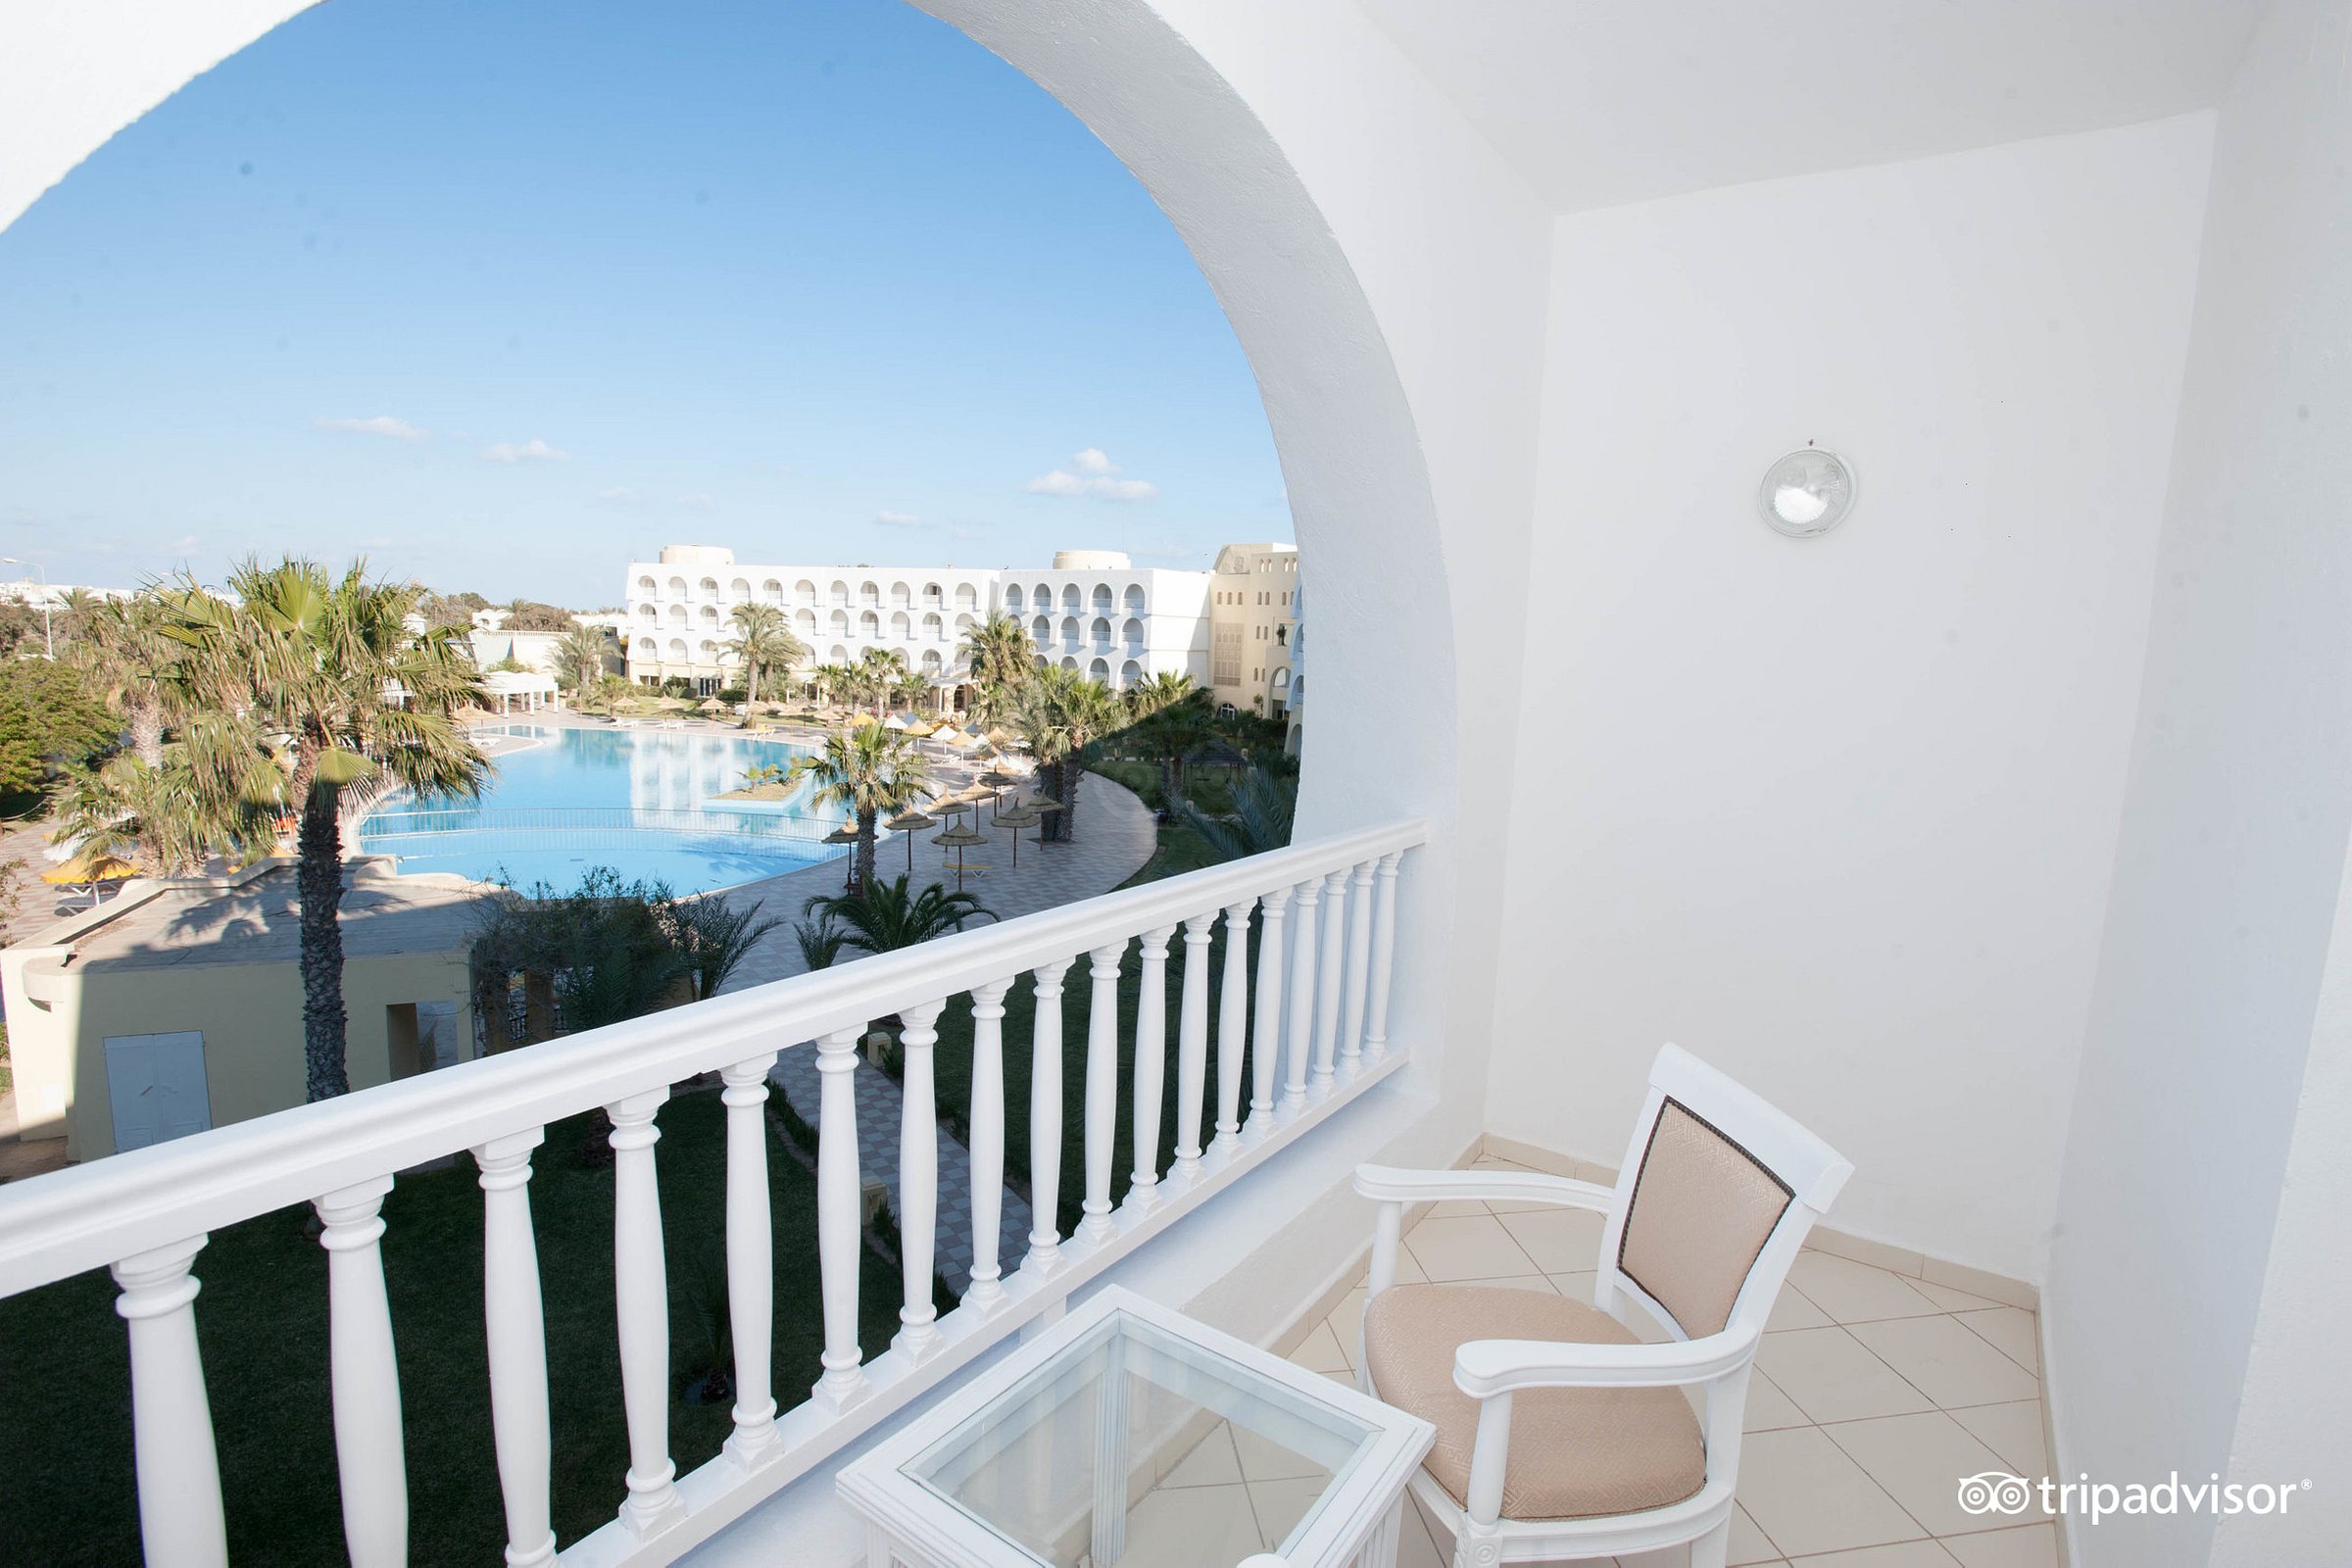 Hôtel Sidi Mansour Resort & Spa